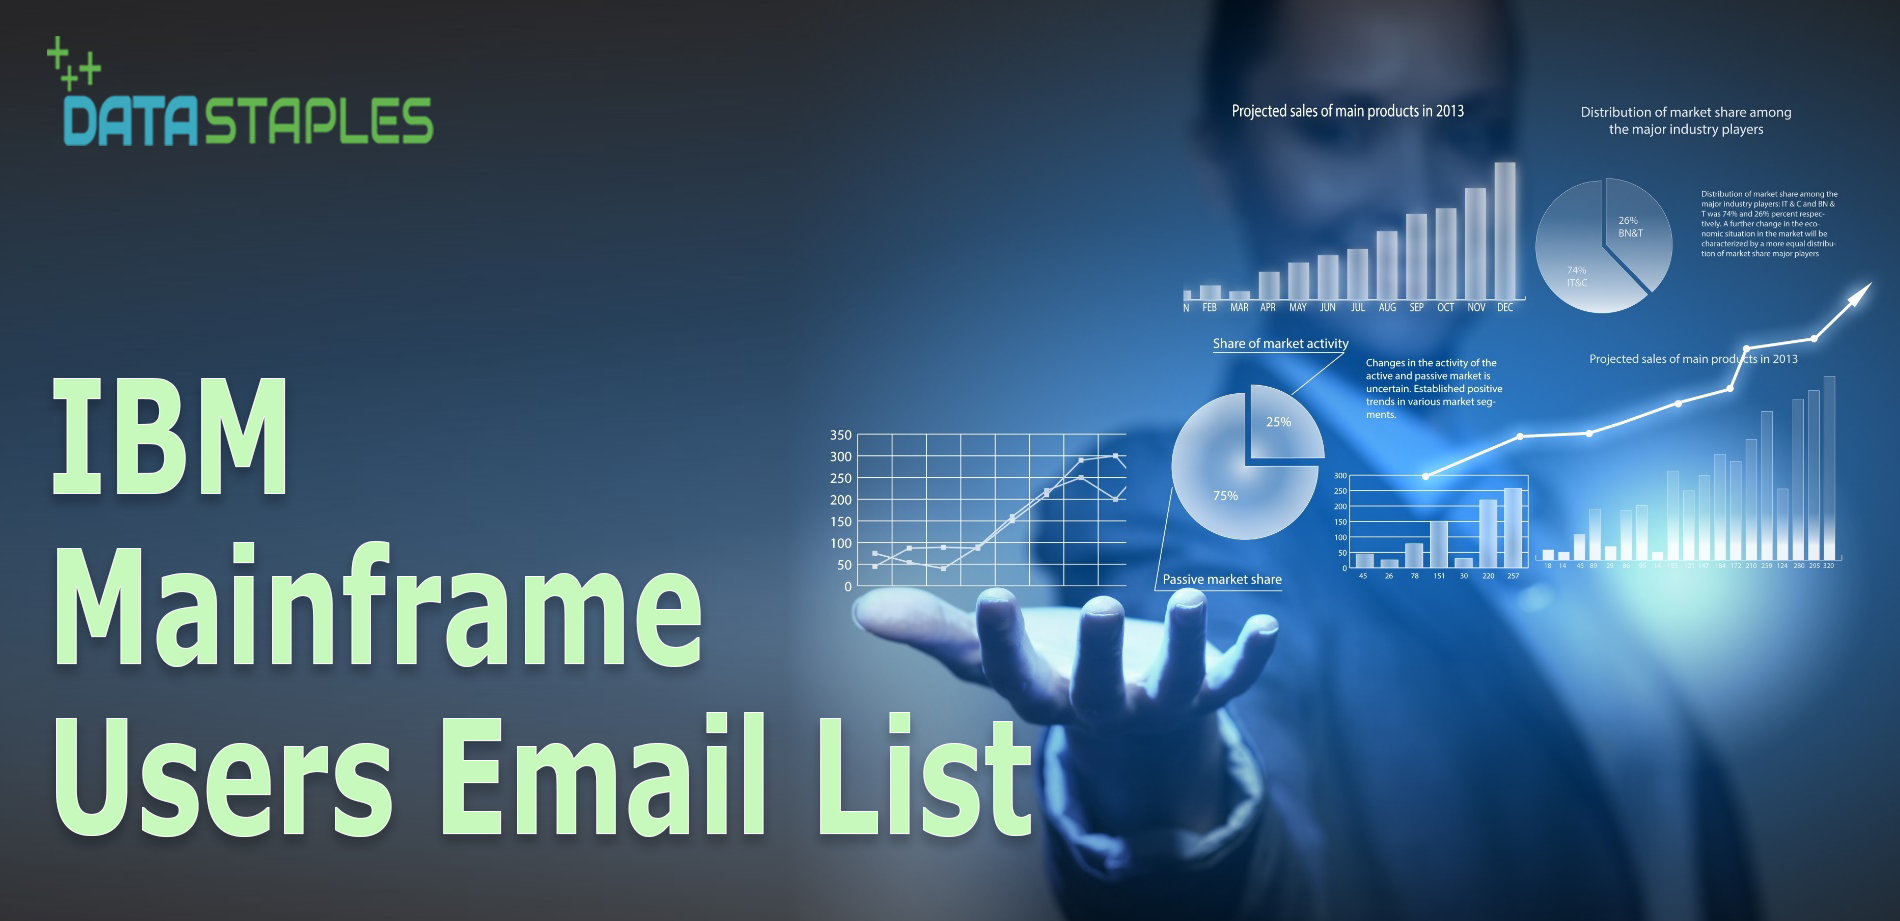 IBM Mainframe Users Email List | DataStaples